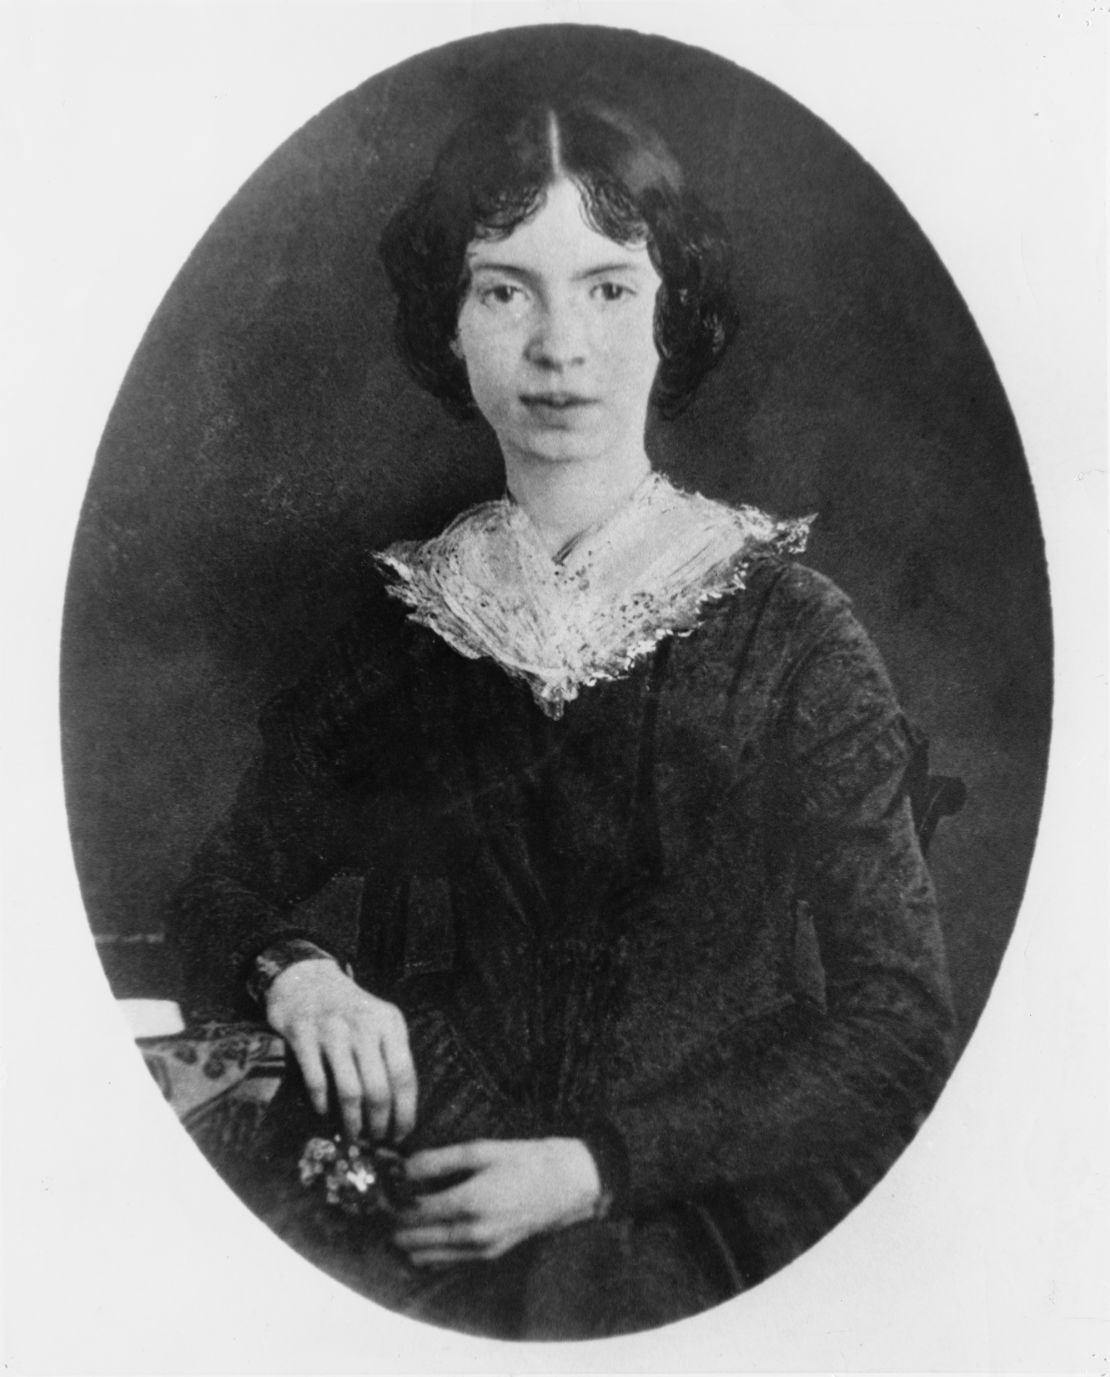 American poet Emily Dickinson in a portrait taken around 1850.